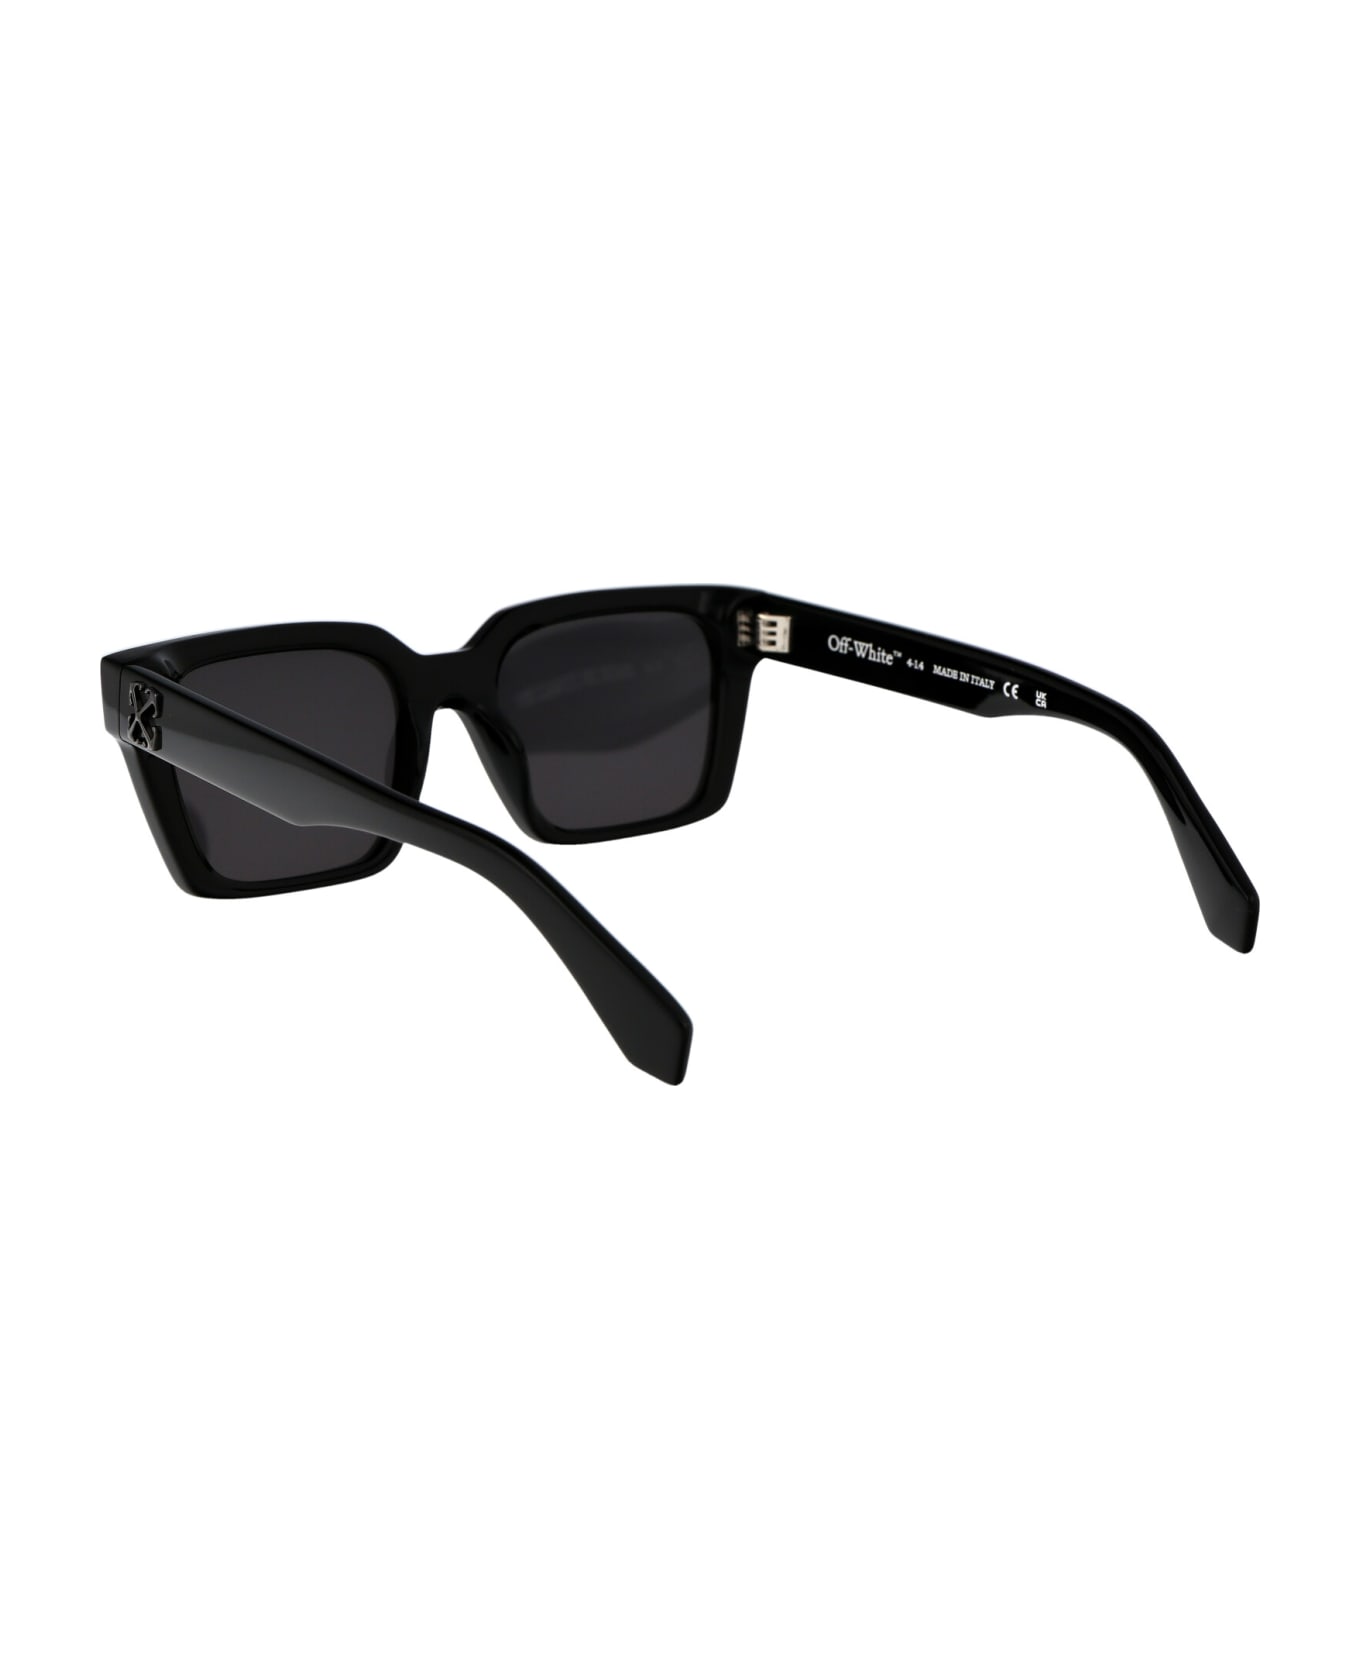 Off-White Branson Sunglasses - 1007 BLACK サングラス